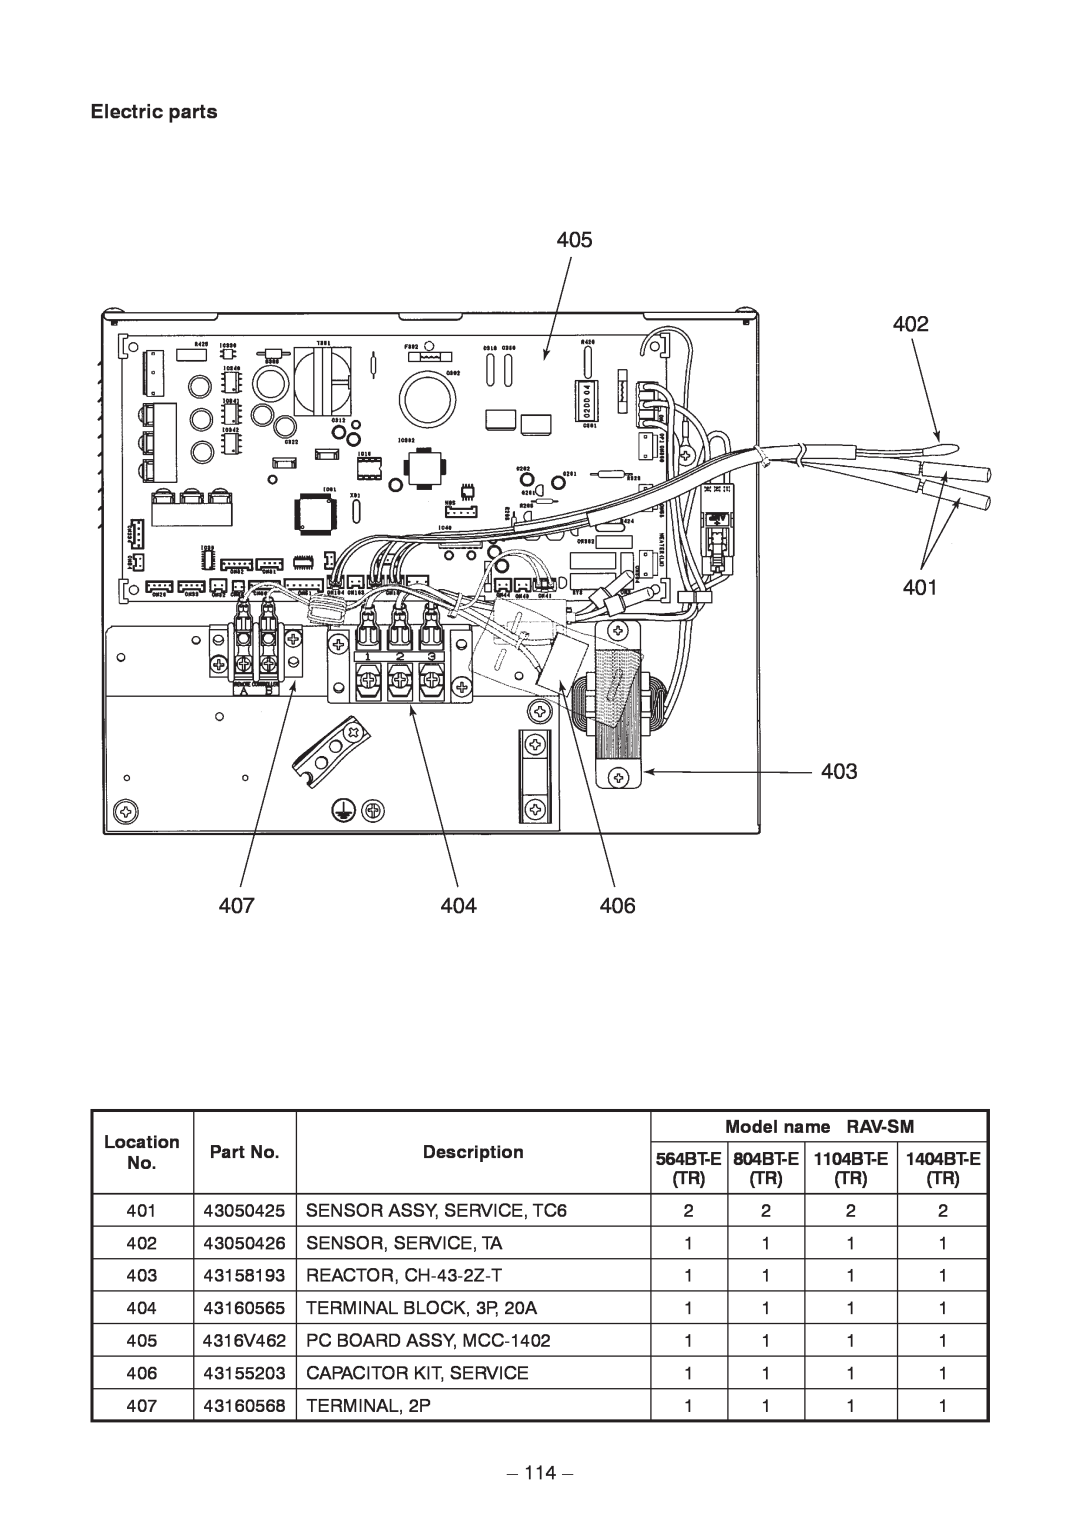 Toshiba RAV-SM1404BT-E, RAV-SM454MUT-E service manual Electric parts, 114, Location, Model name RAV-SM, Part No, Description 